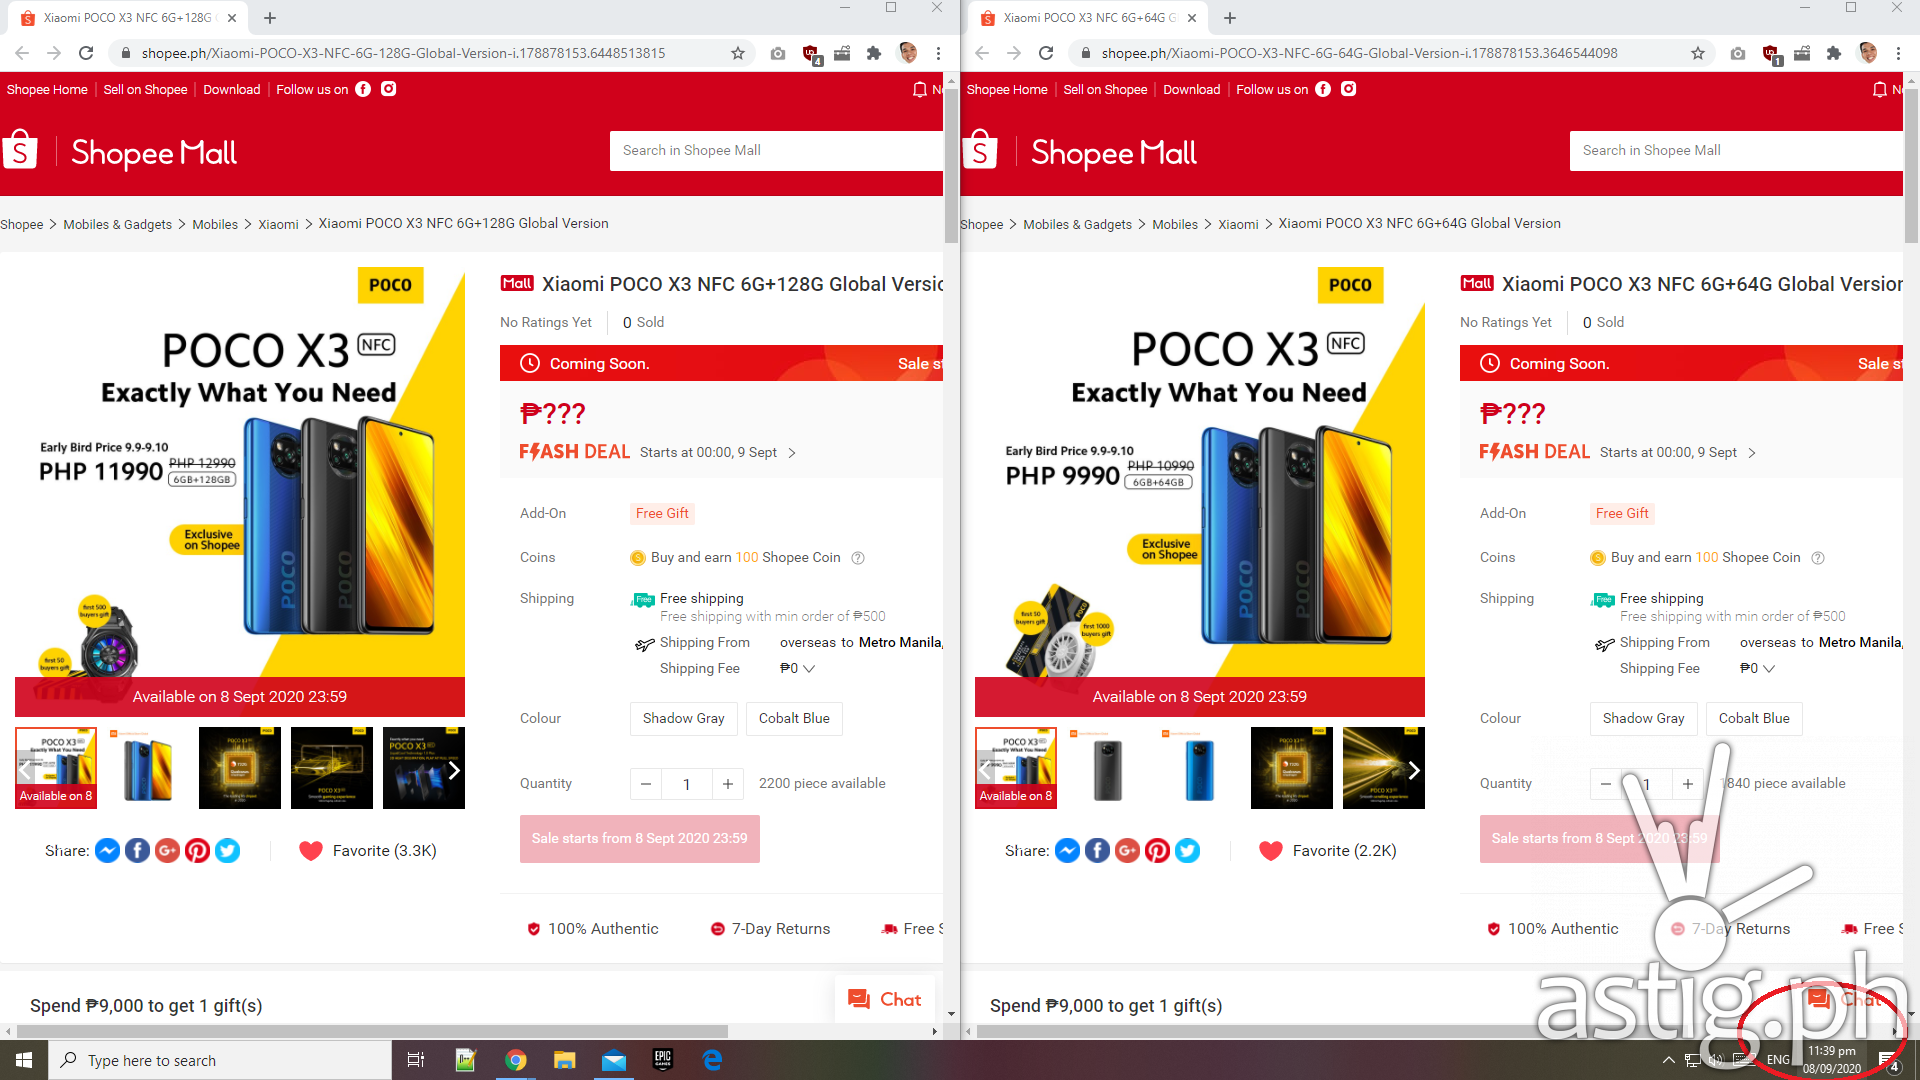 POCO X3 NFC Shopee Philippines before flash sale